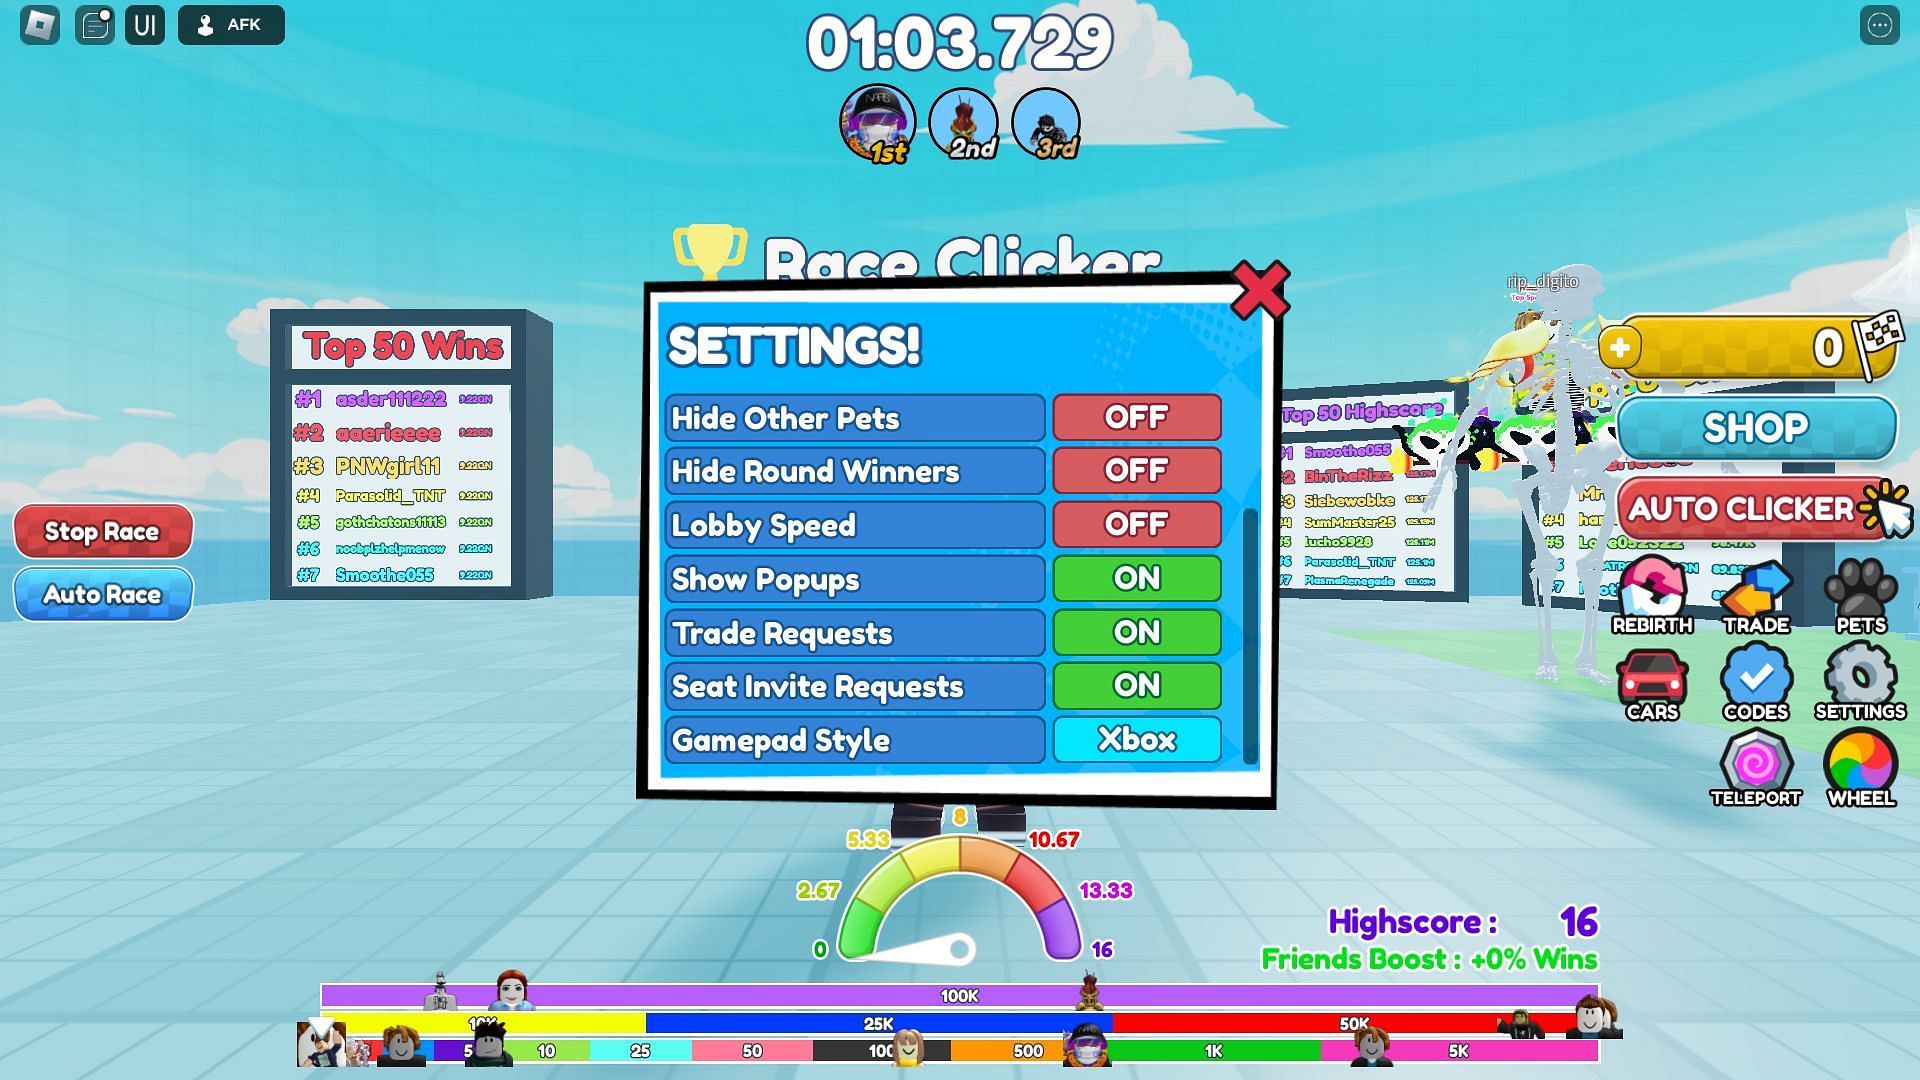 Race Clicker settings (Image via Roblox and Sportskeeda)